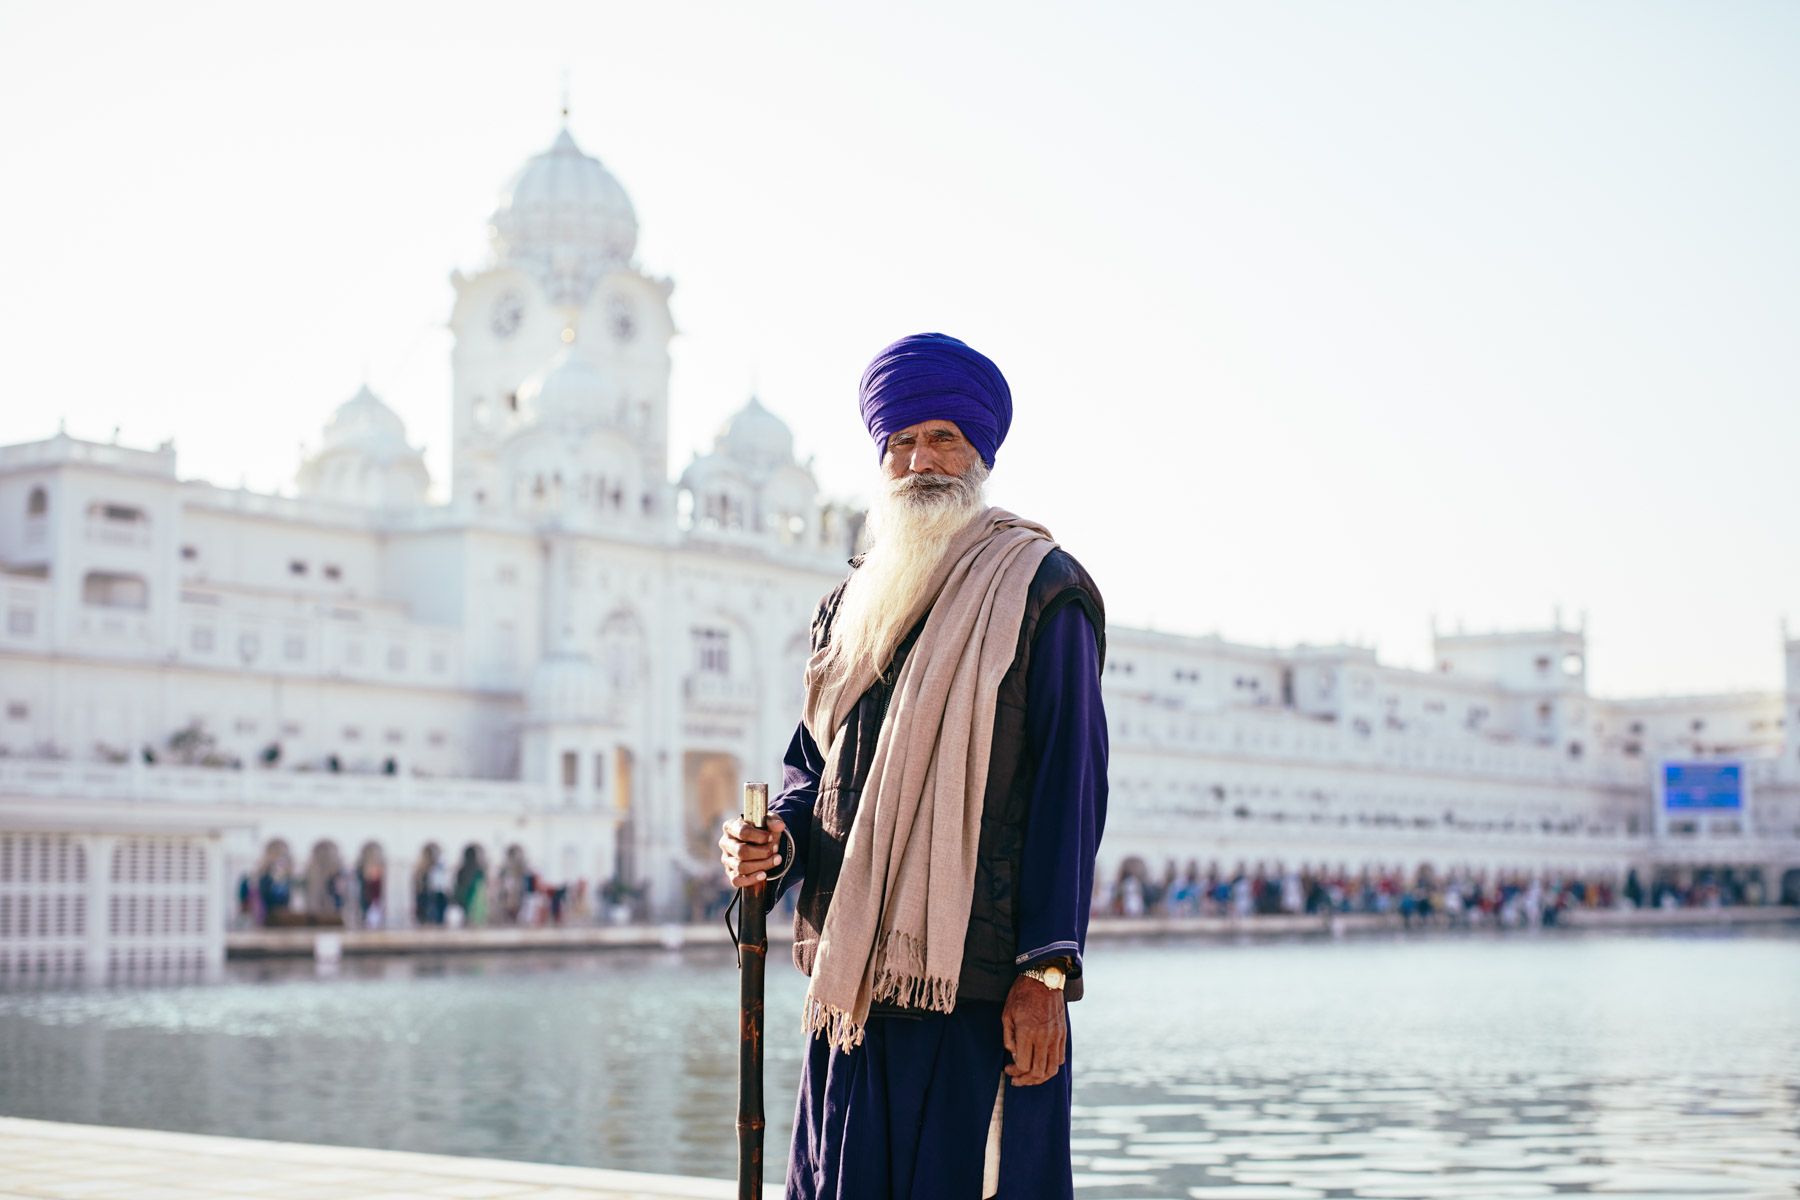 Nihang Sikh am goldenen Tempel in Amritsar/ Punjab/ Indien, 2018